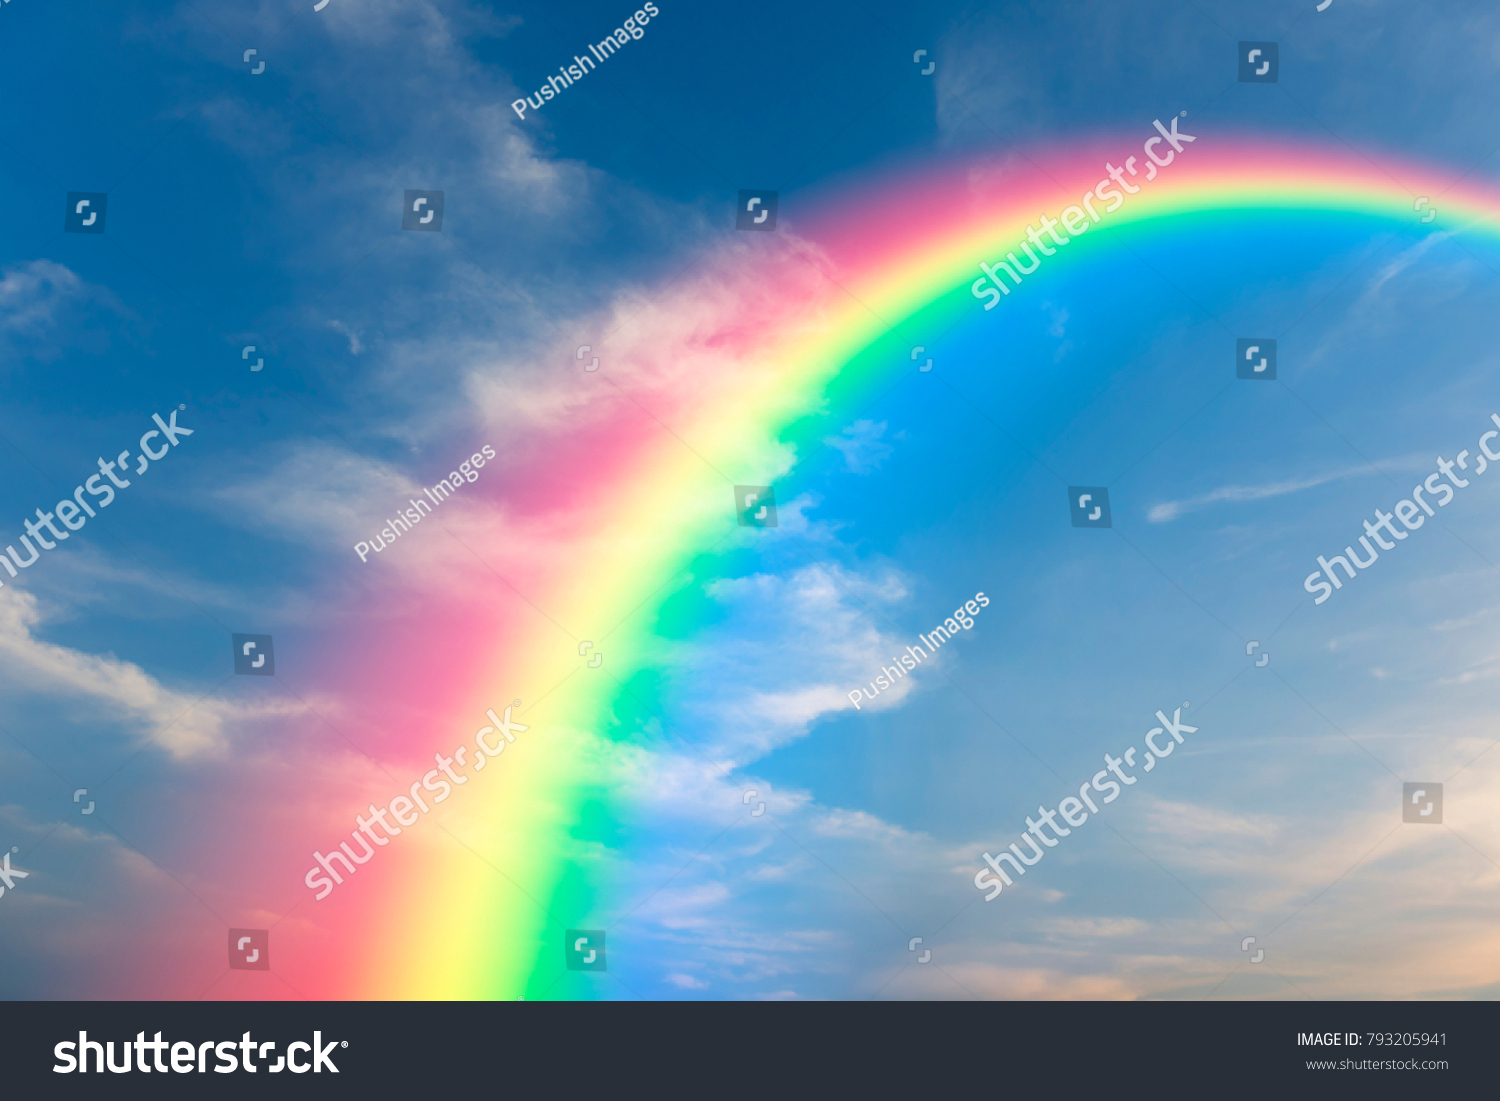 Rainbow and sky background #793205941